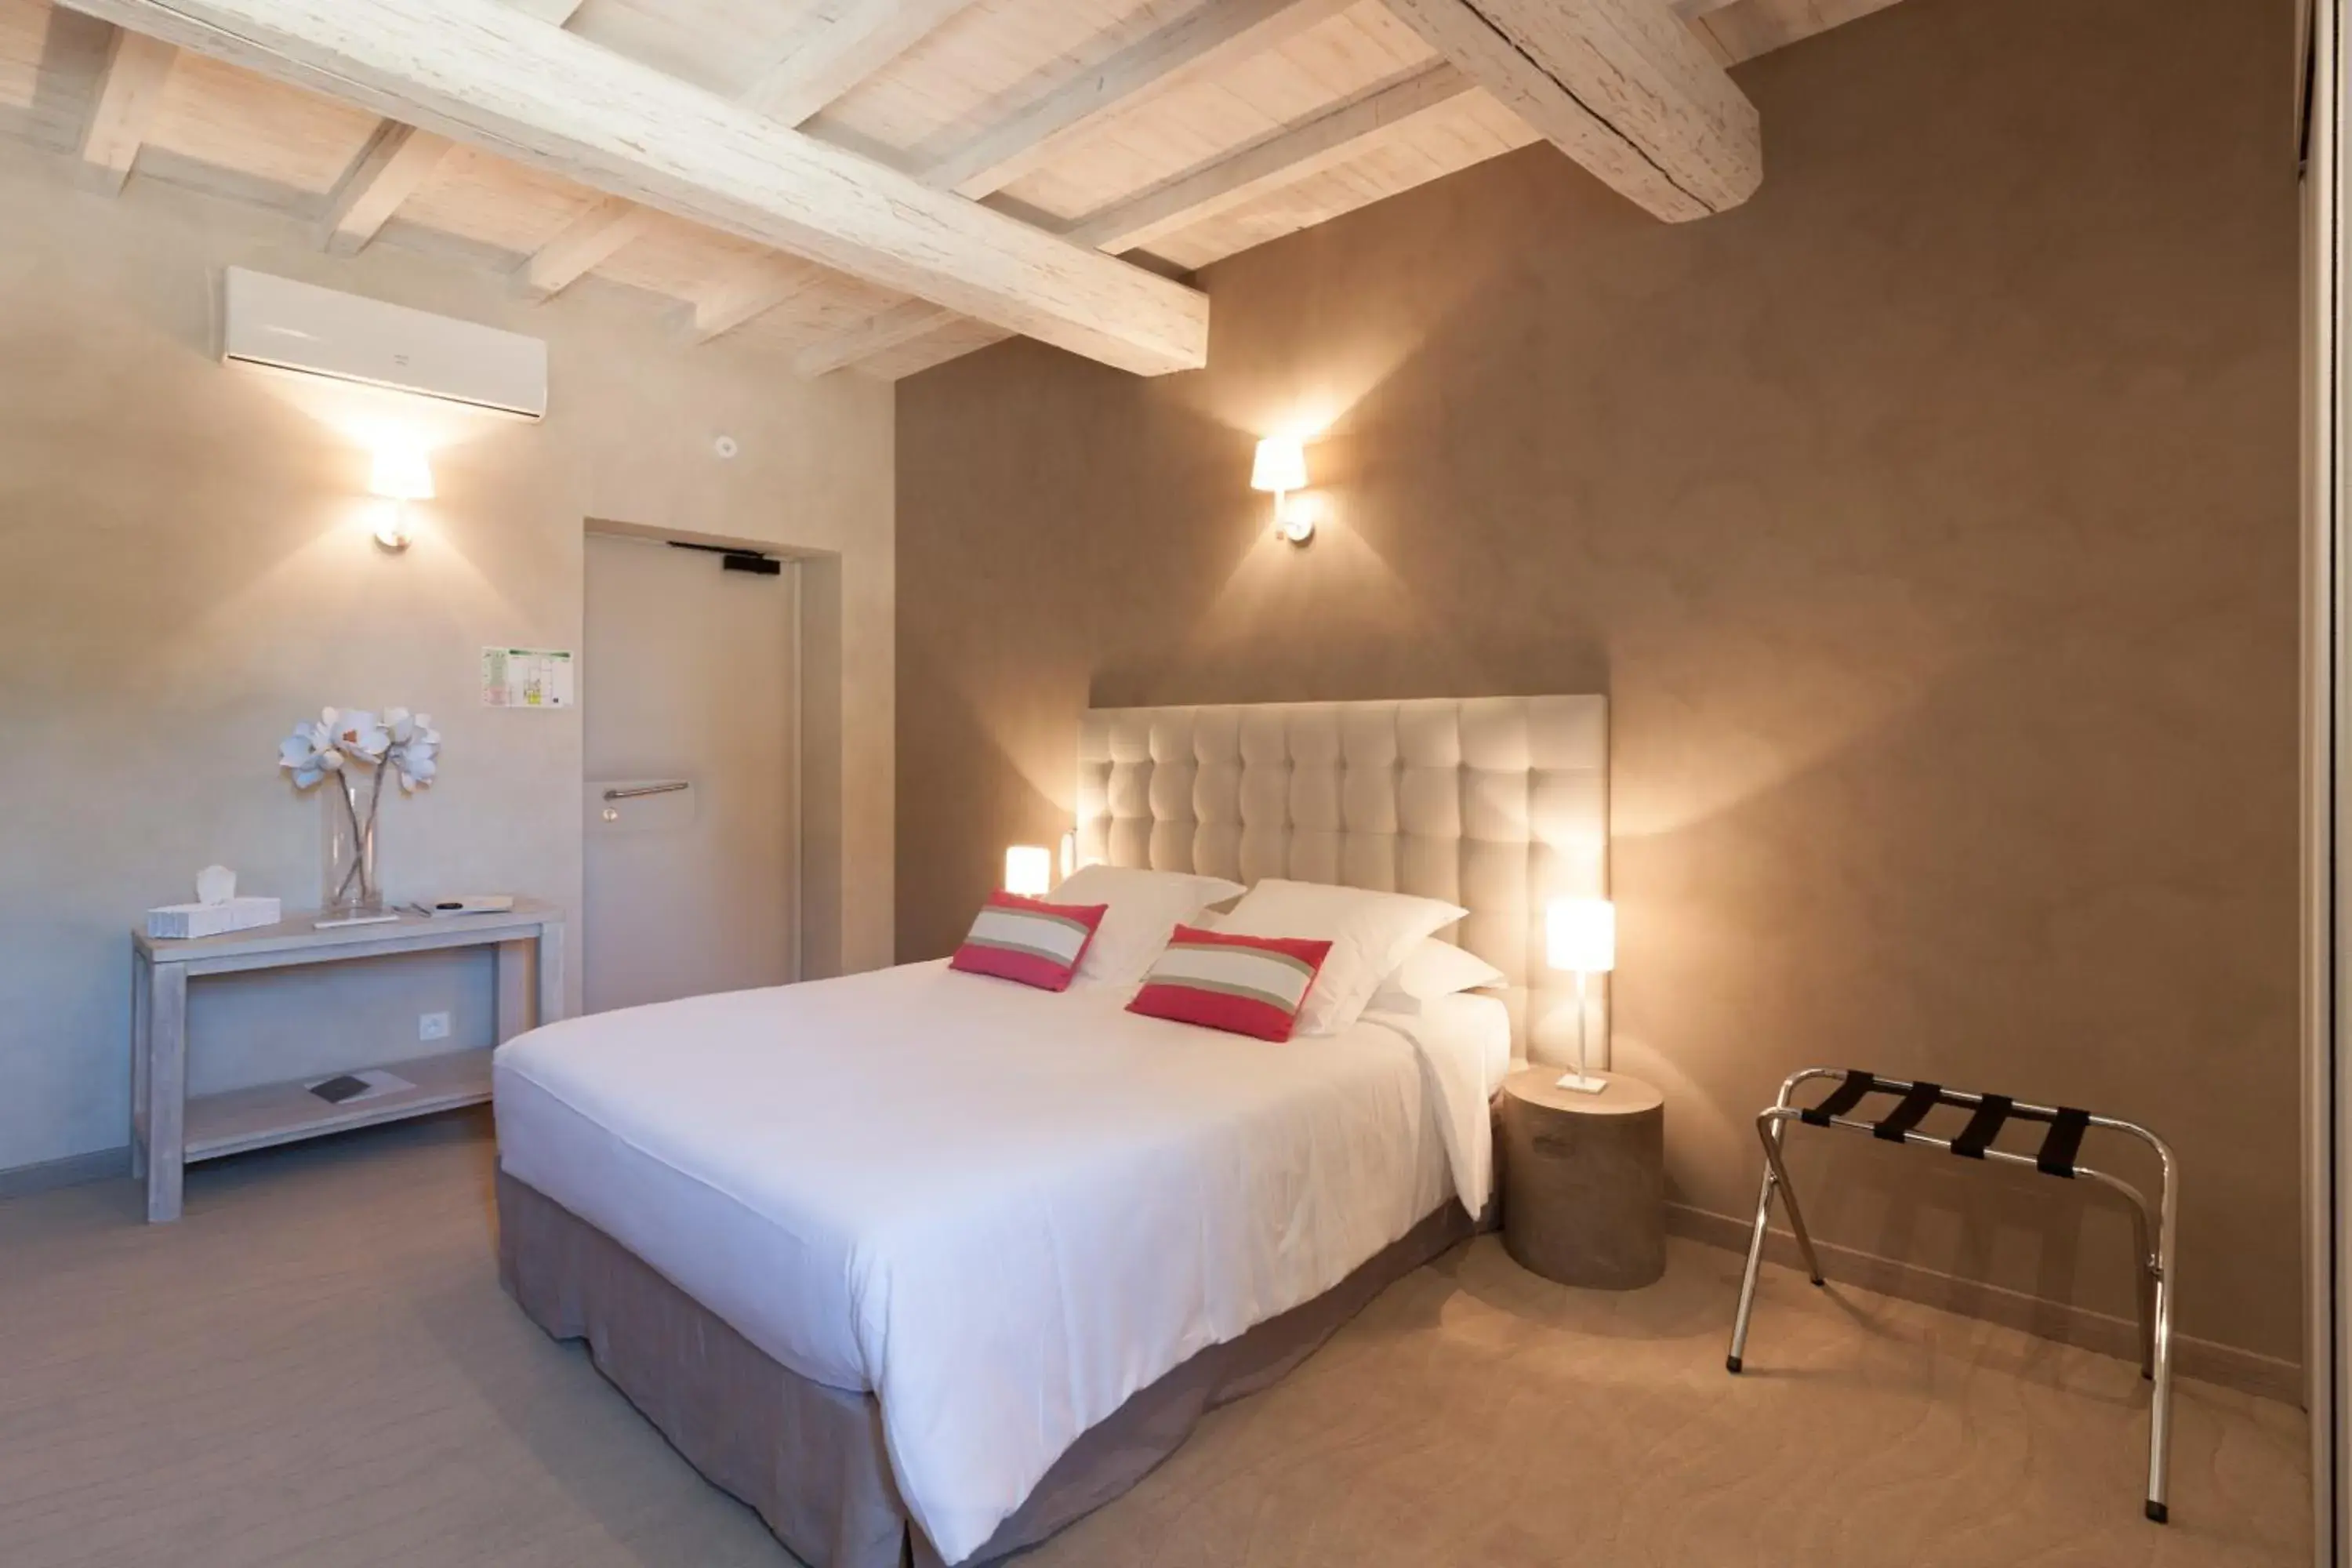 Bed, Room Photo in Villa Montesquieu